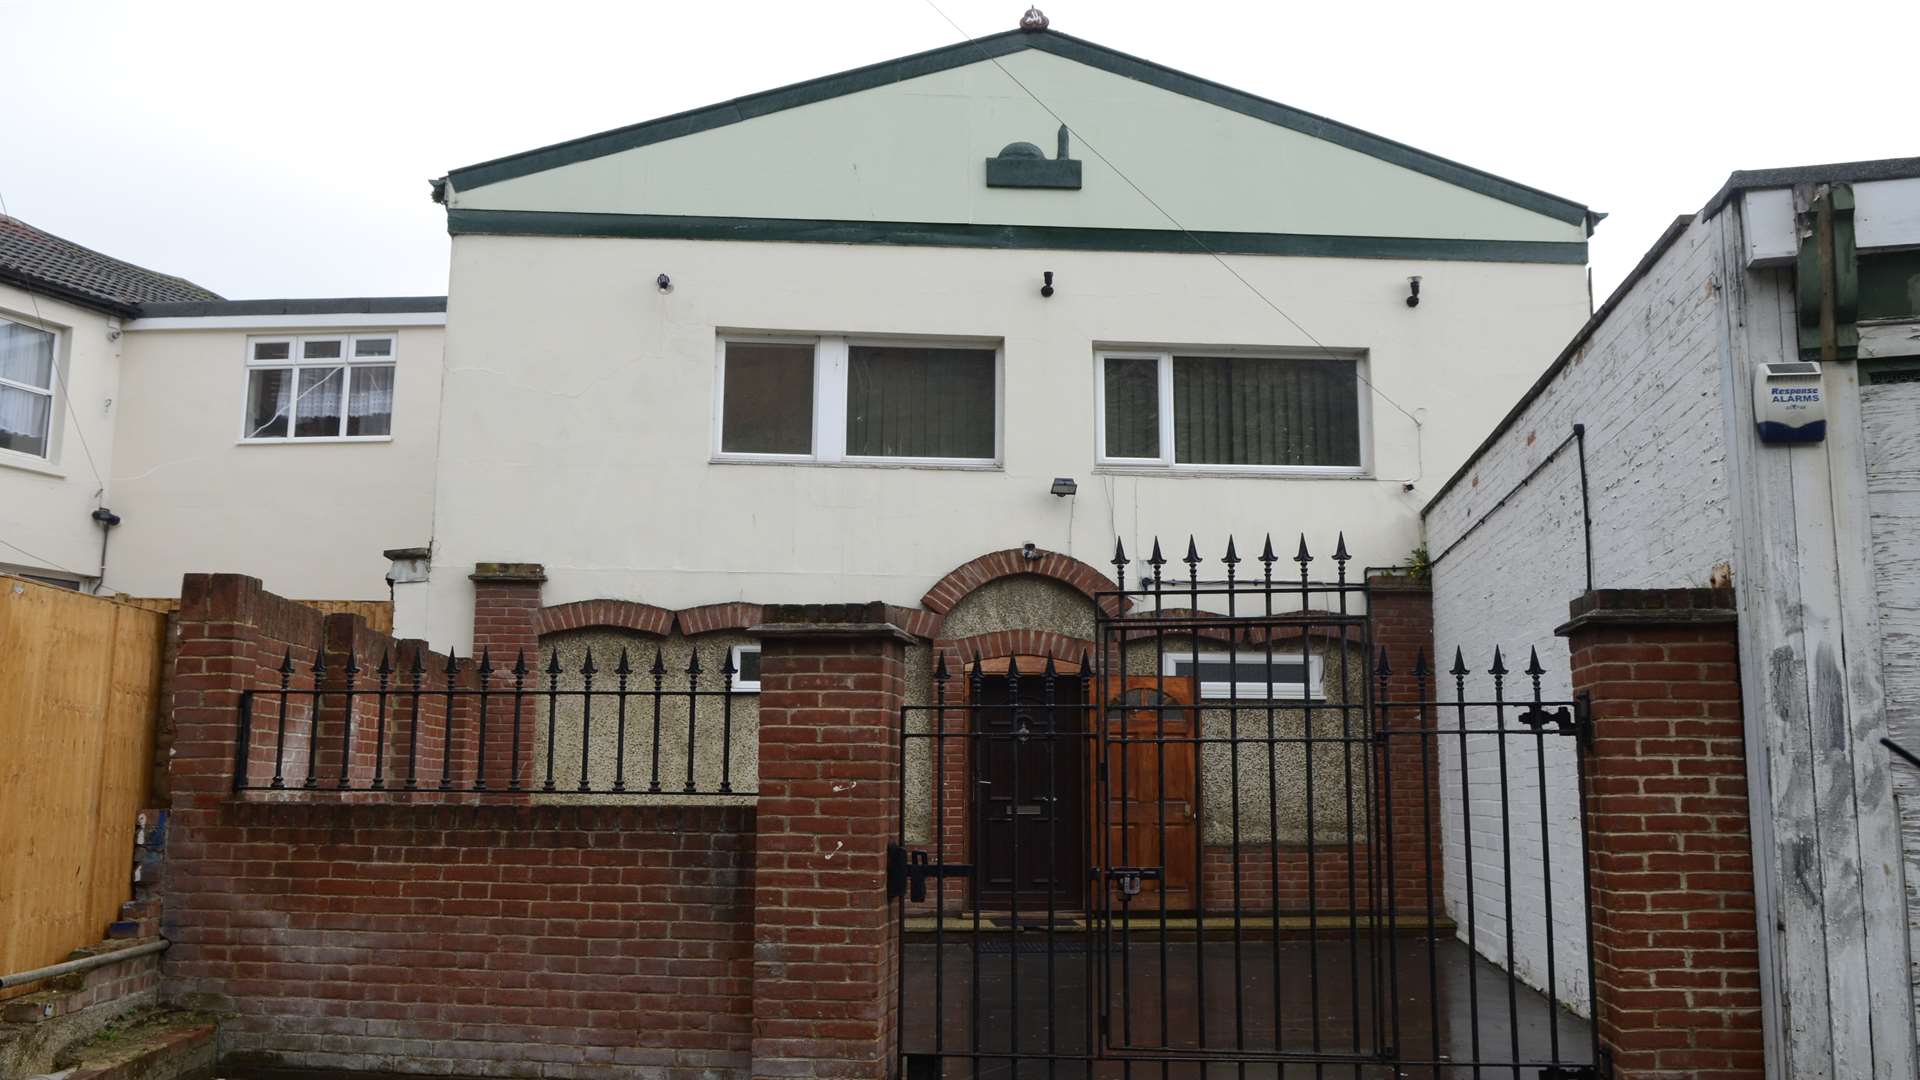 Folkestone Mosque in Foord Road South